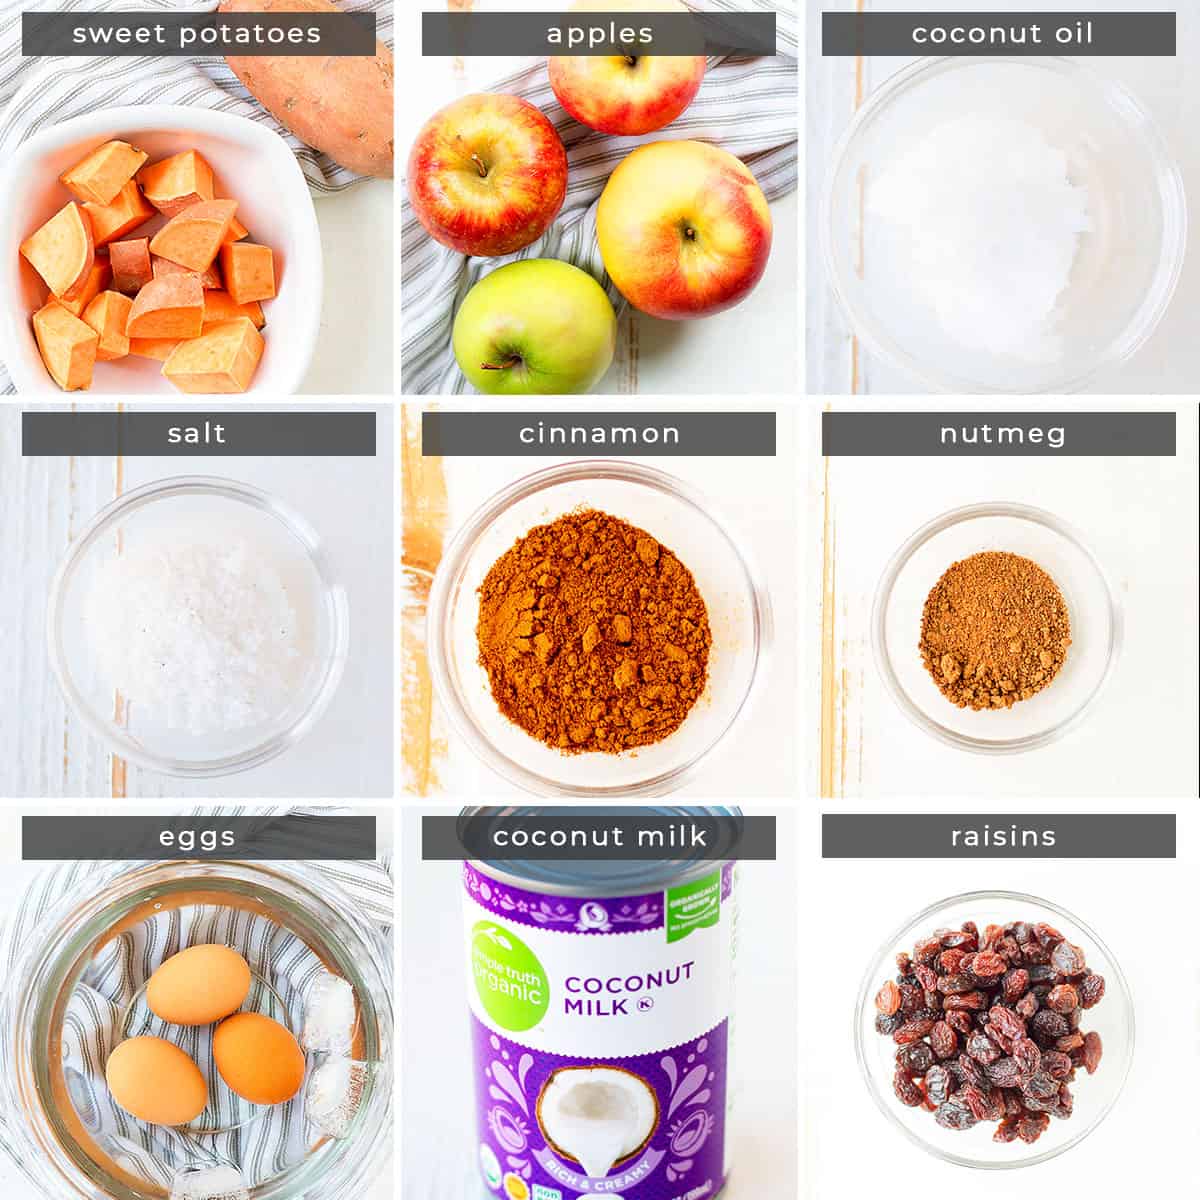 Image contains recipe ingredients sweet potato, apples, coconut oil, salt, cinnamon, nutmeg, eggs, coconut milk, raisins. 